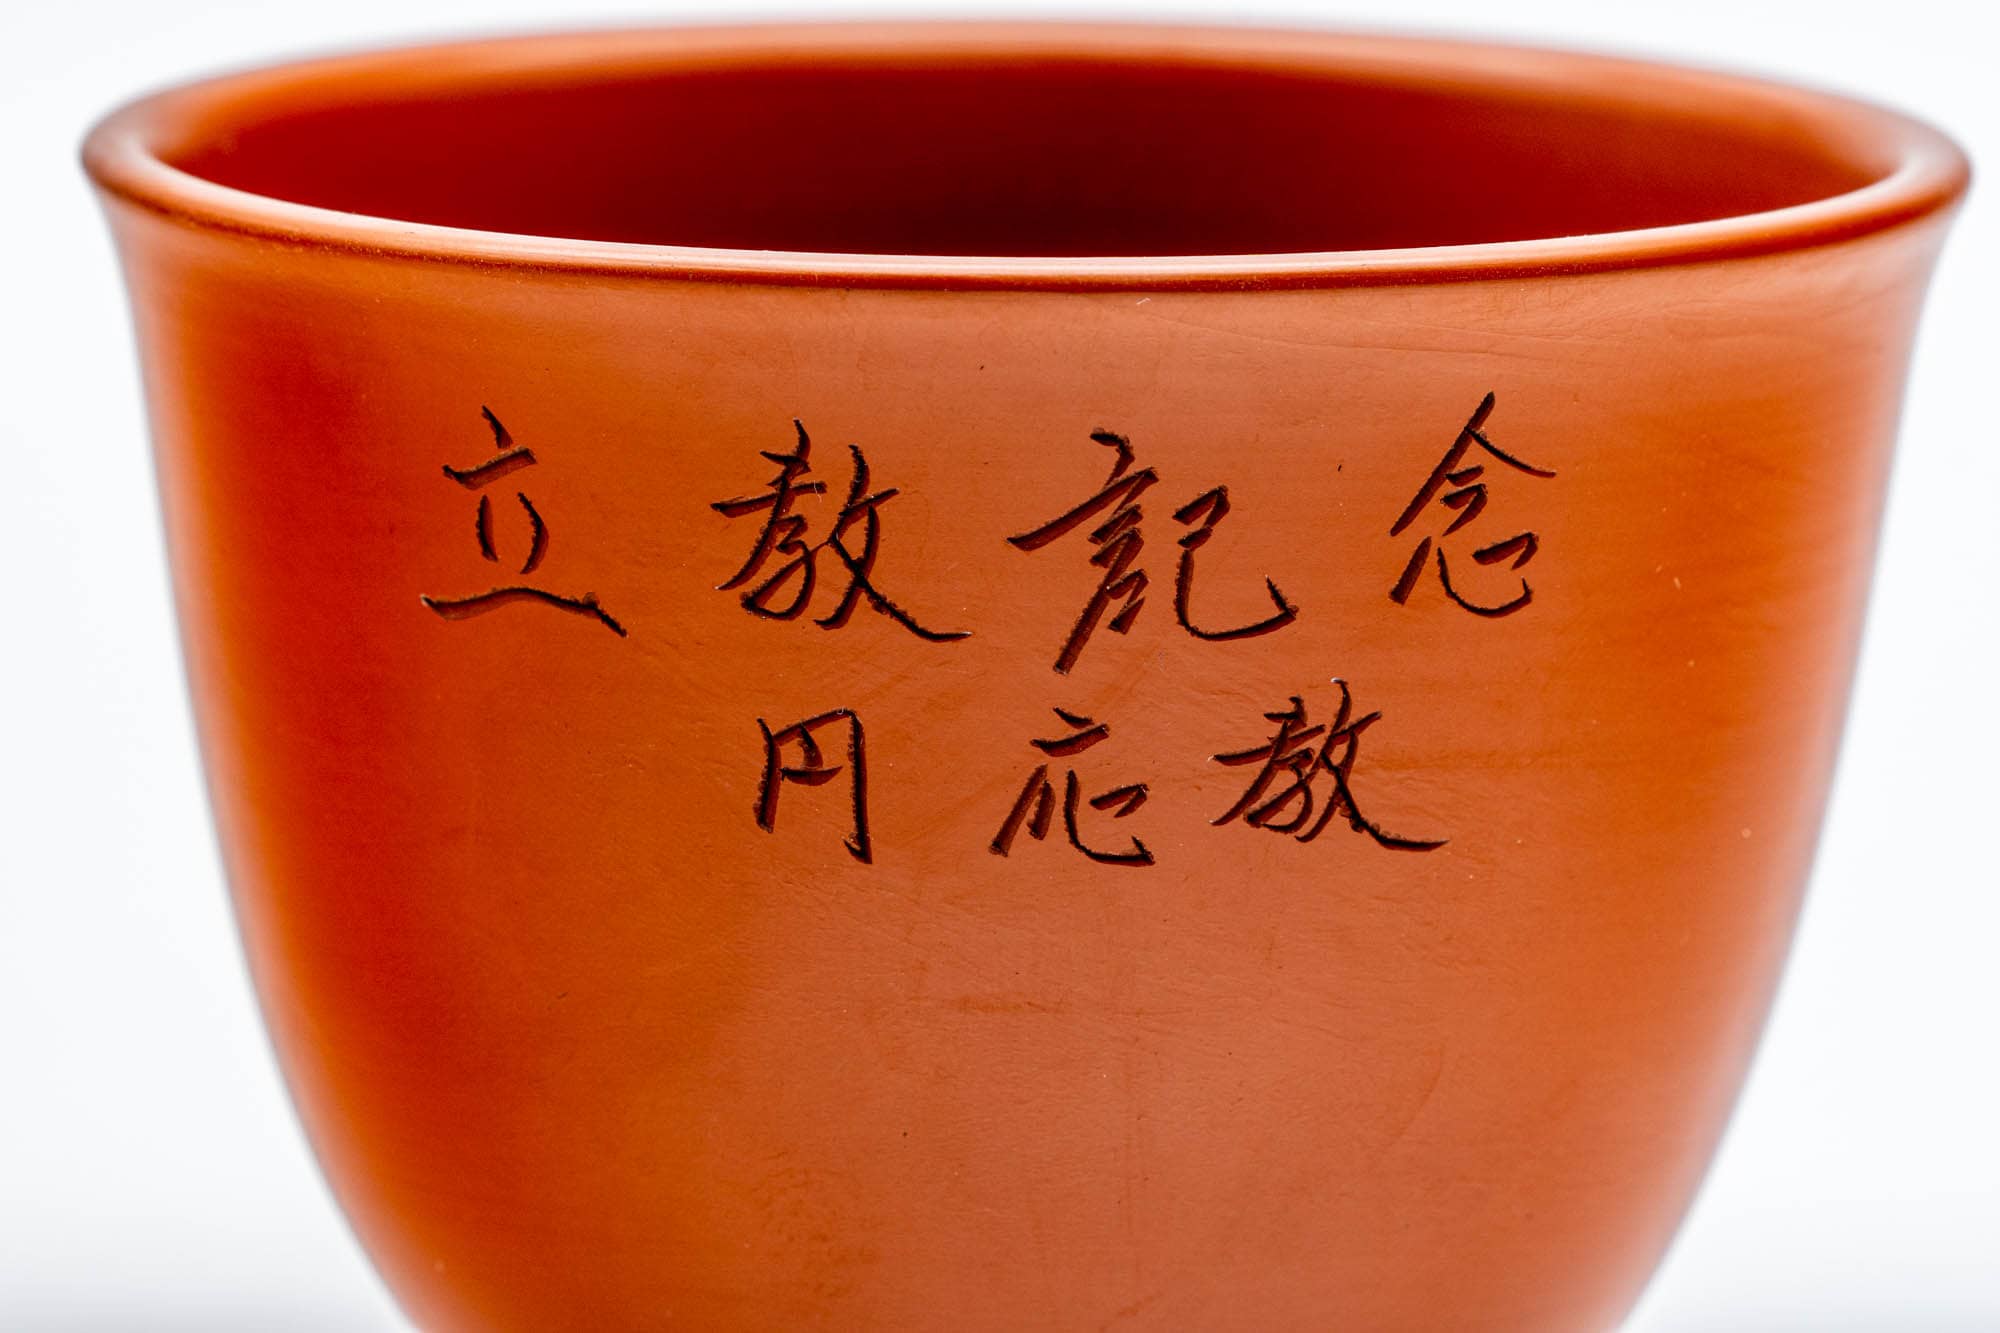 Japanese Teacup - Calligraphy Engraved Red Shudei Tokoname-yaki Yunomi - 130ml